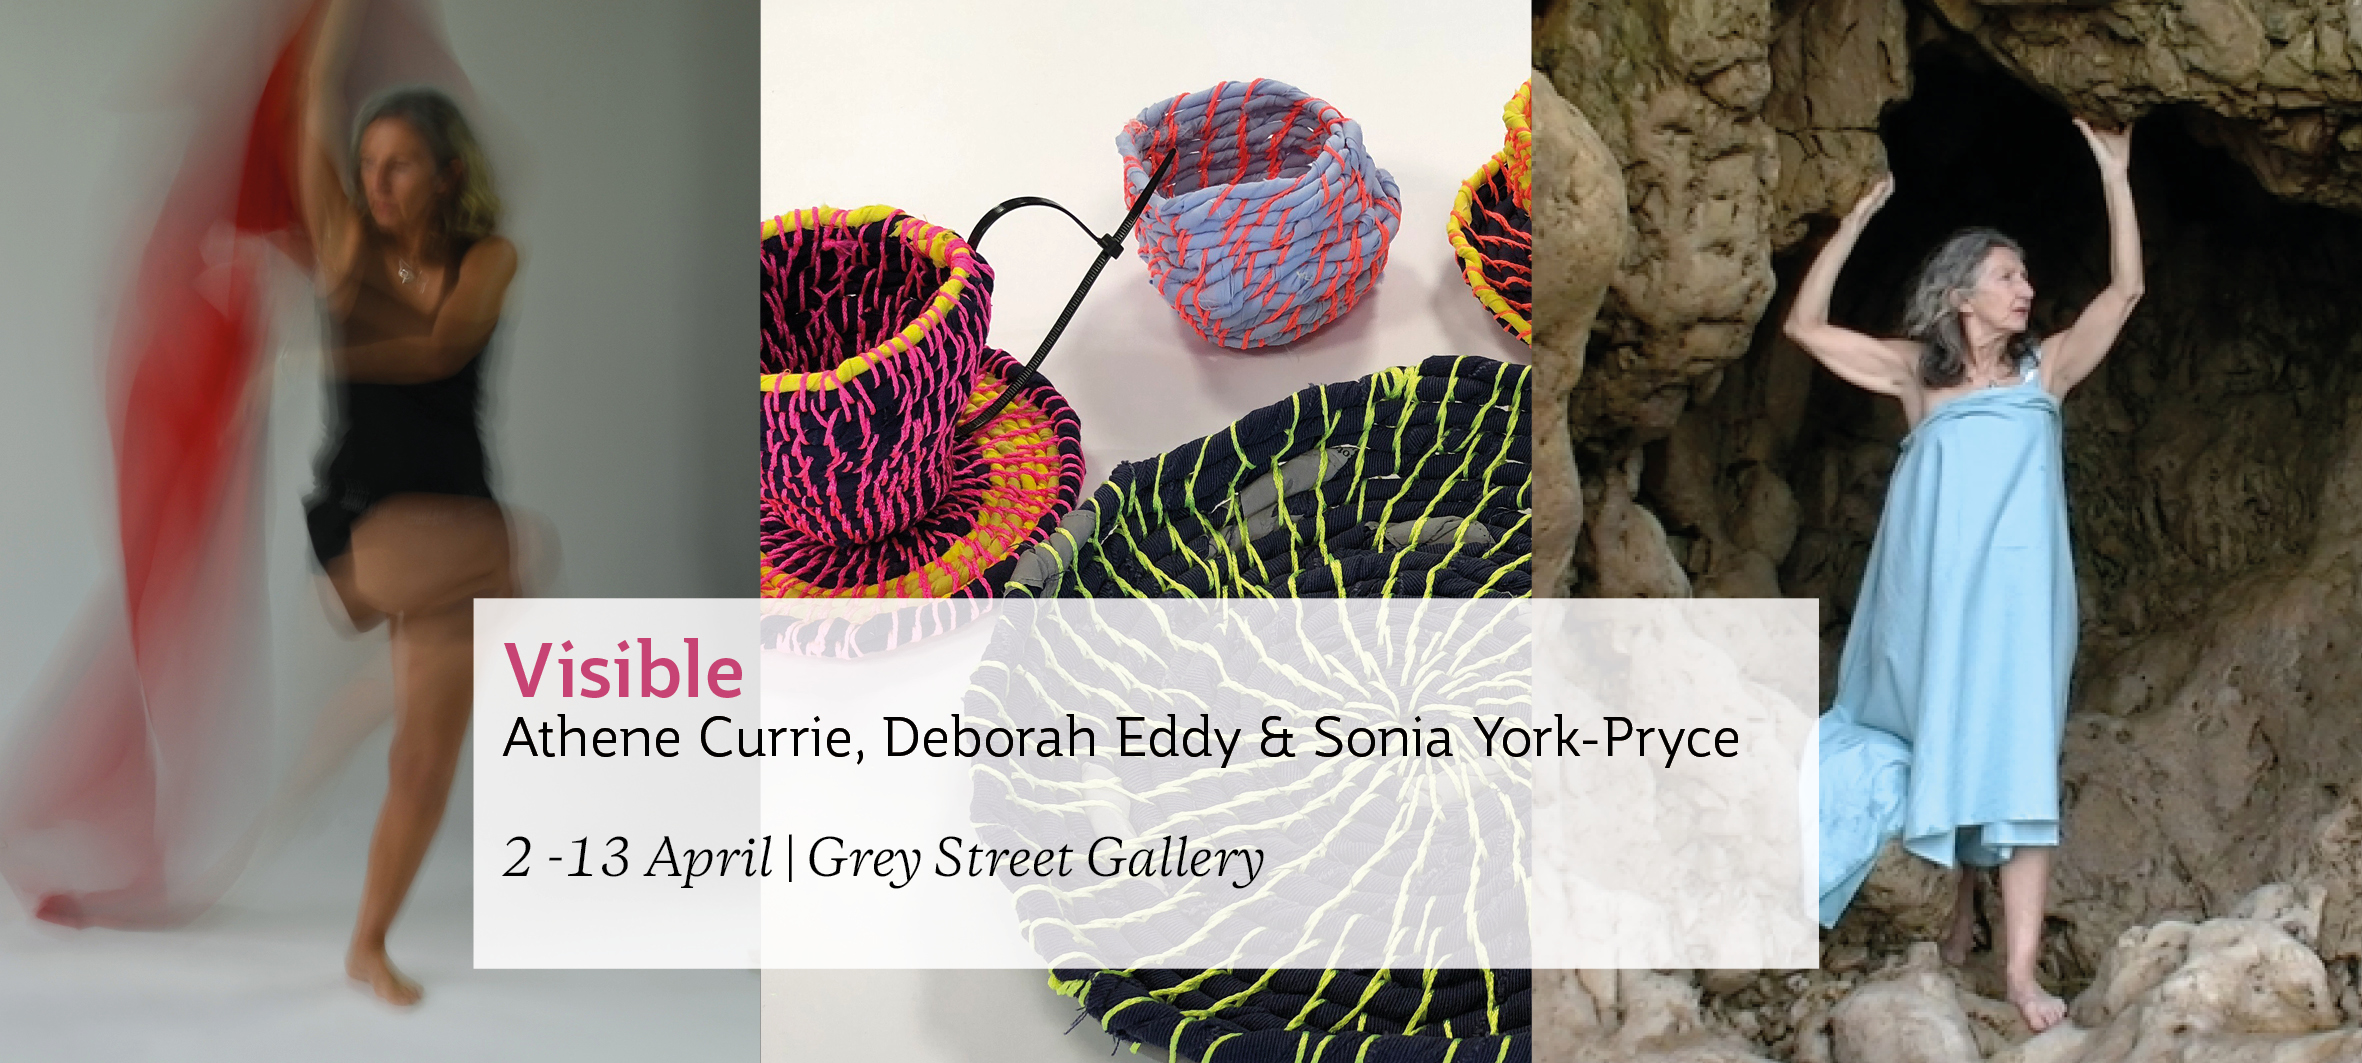 Visible - Athene Currie, Deborah Eddy & Sonia York-Pryce